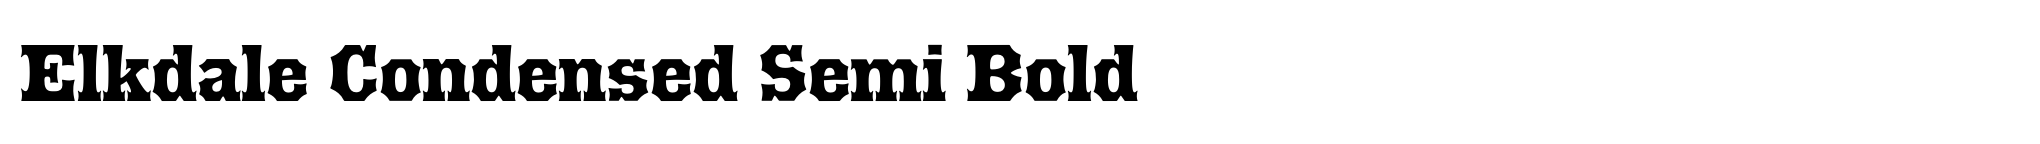 Elkdale Condensed Semi Bold image